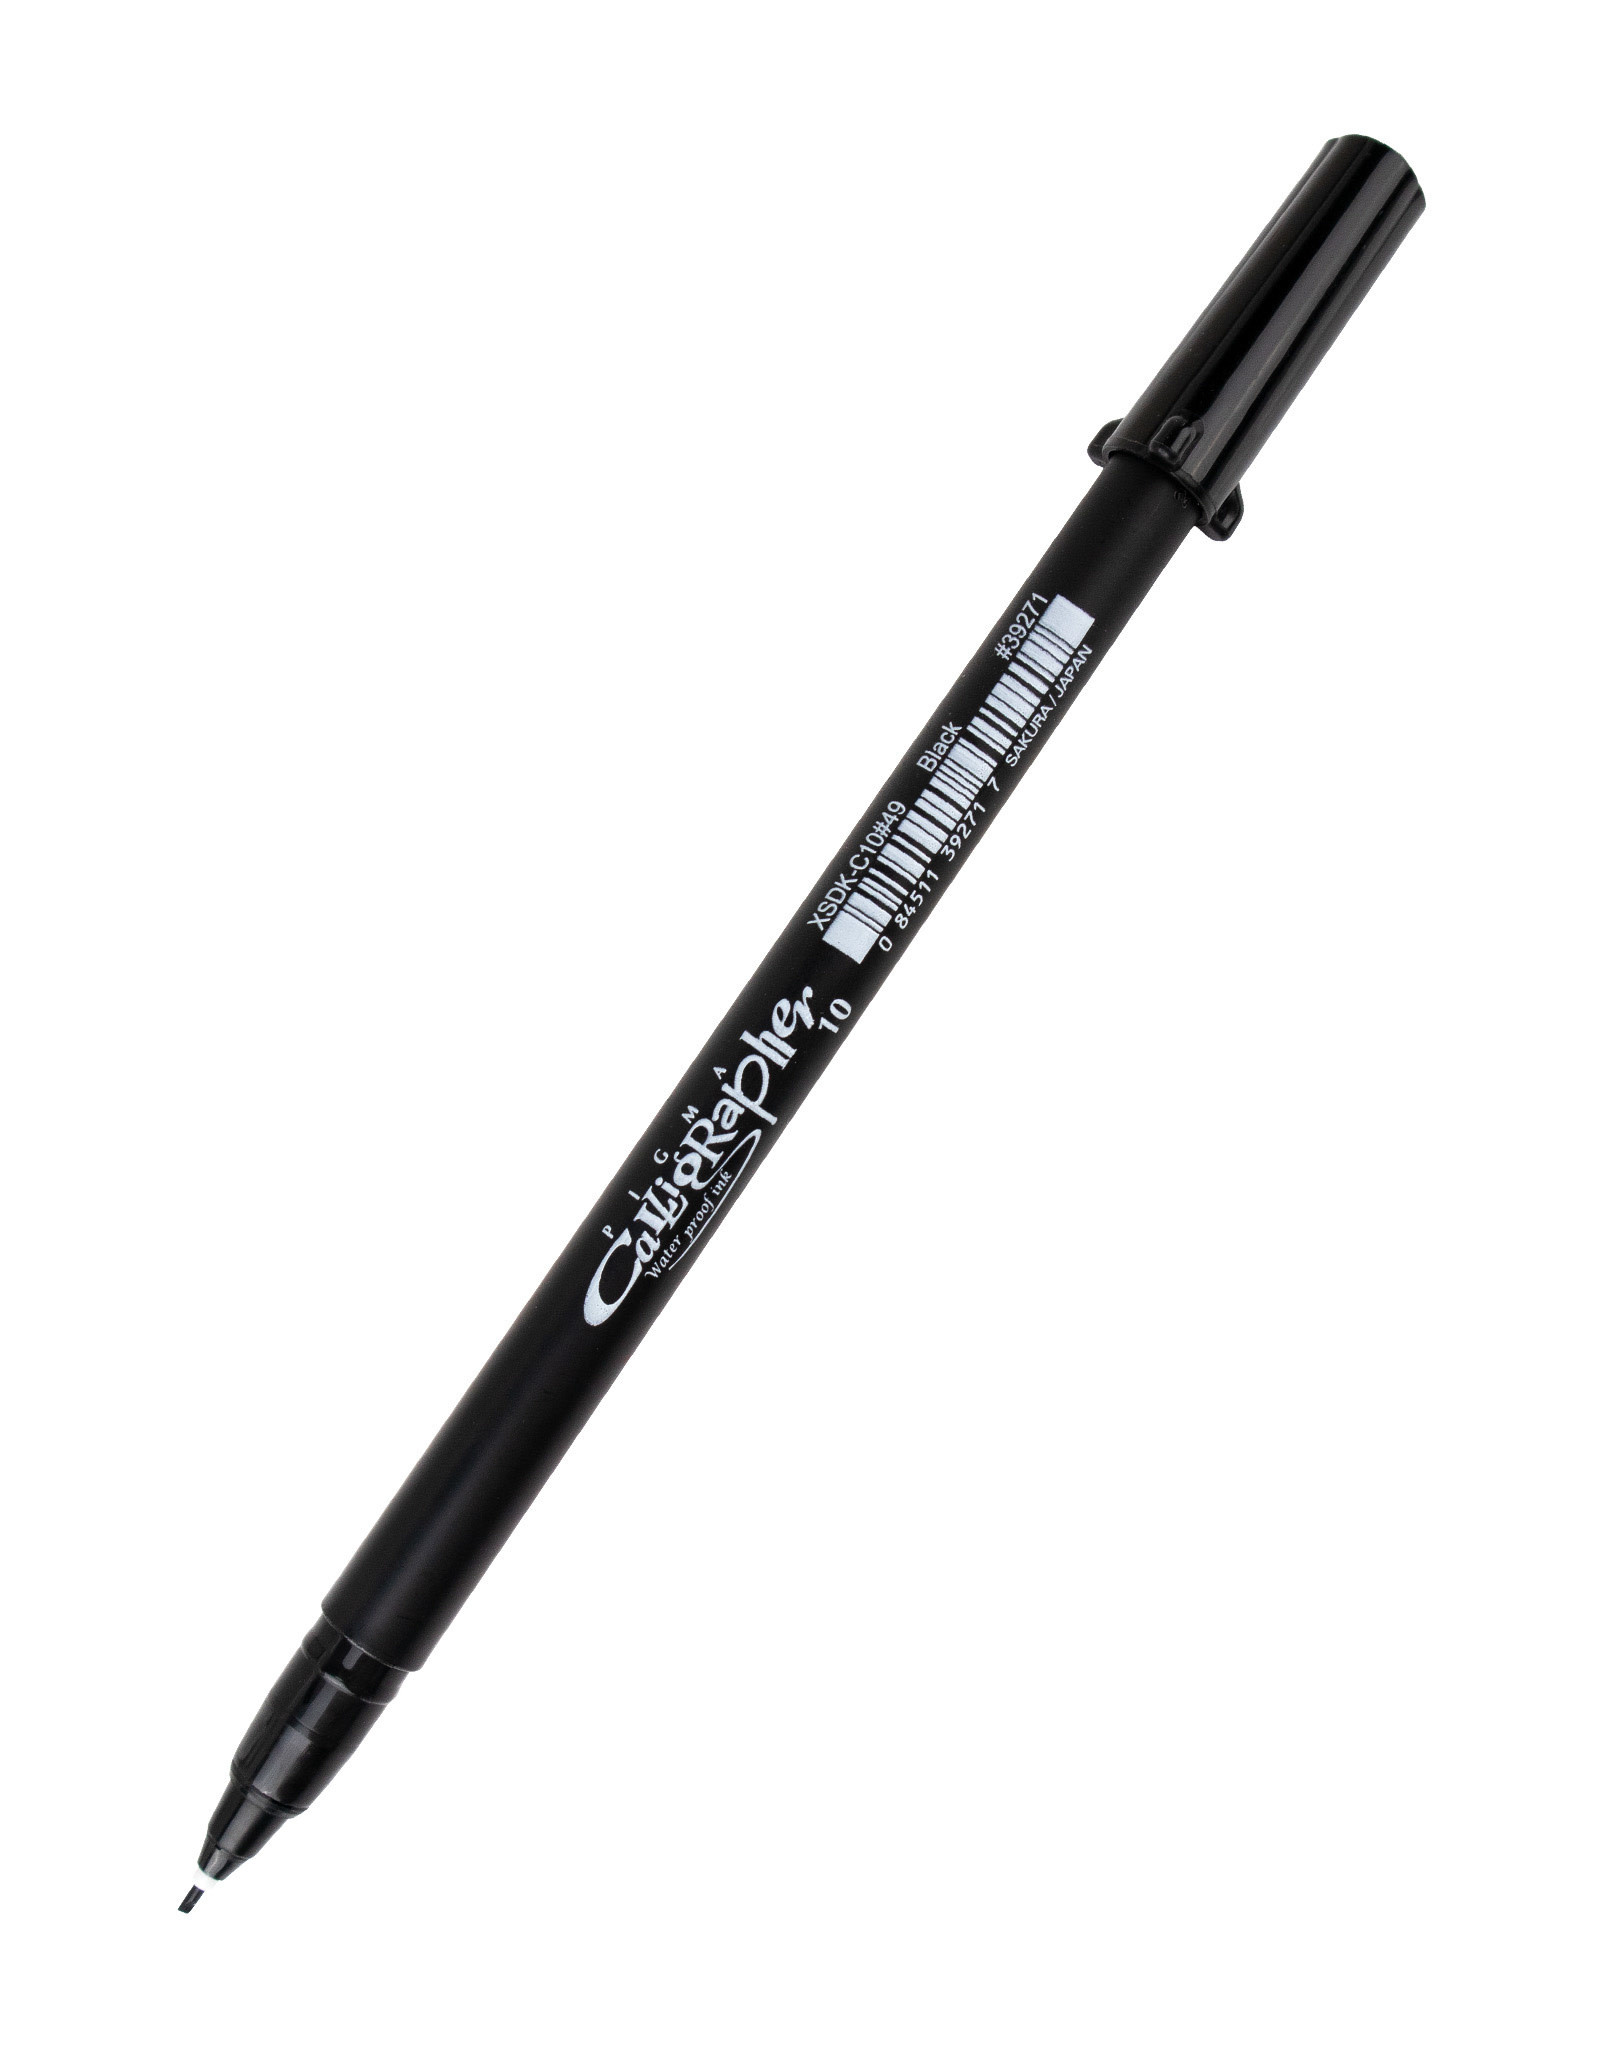 Sakura Pigma Calligrapher® Calligraphy Pens, Black